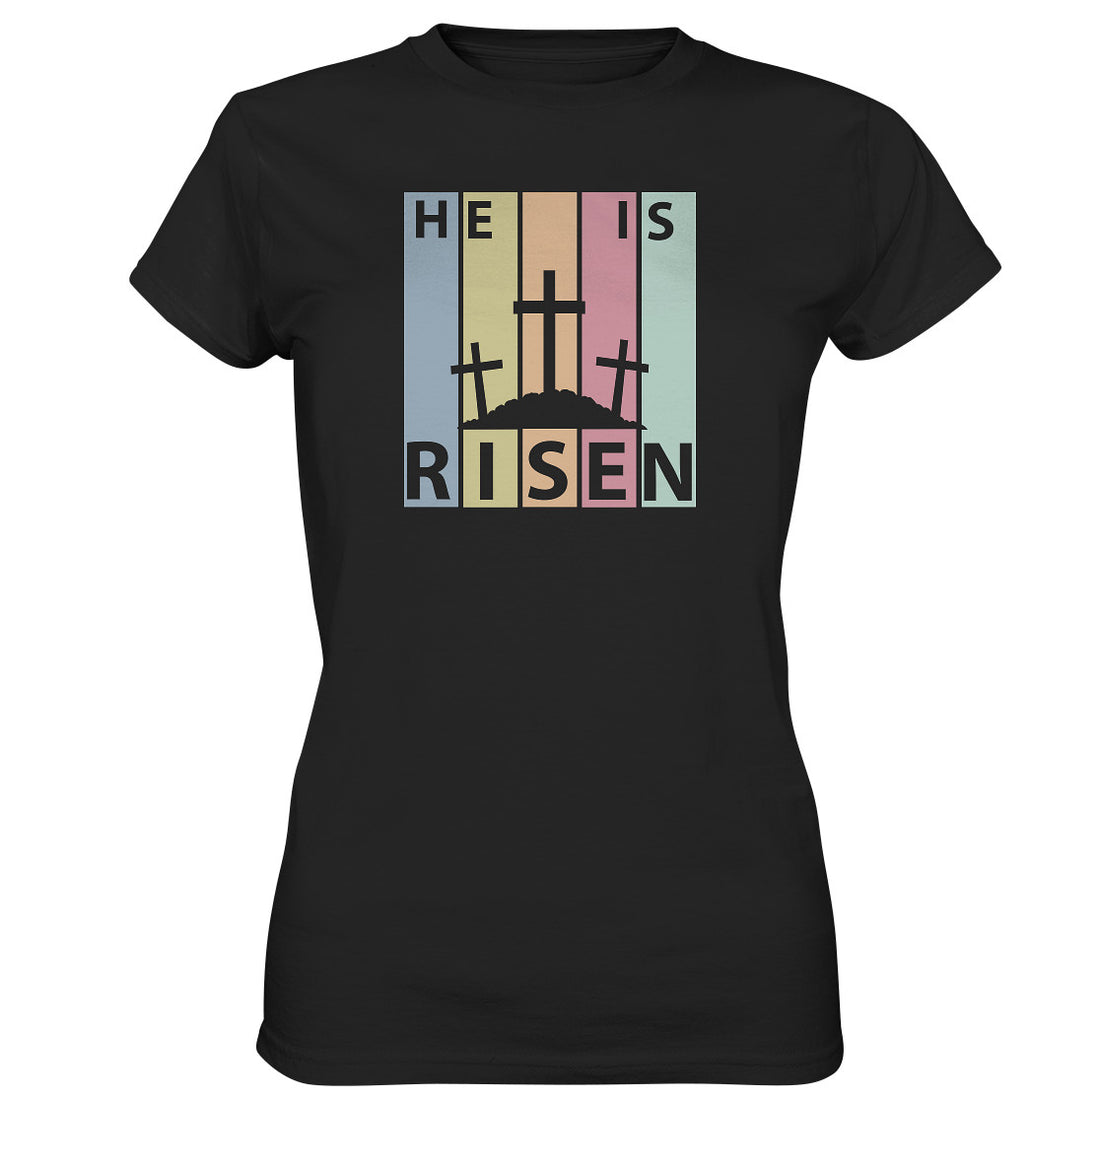 He is risen - Ladies Premium Shirt